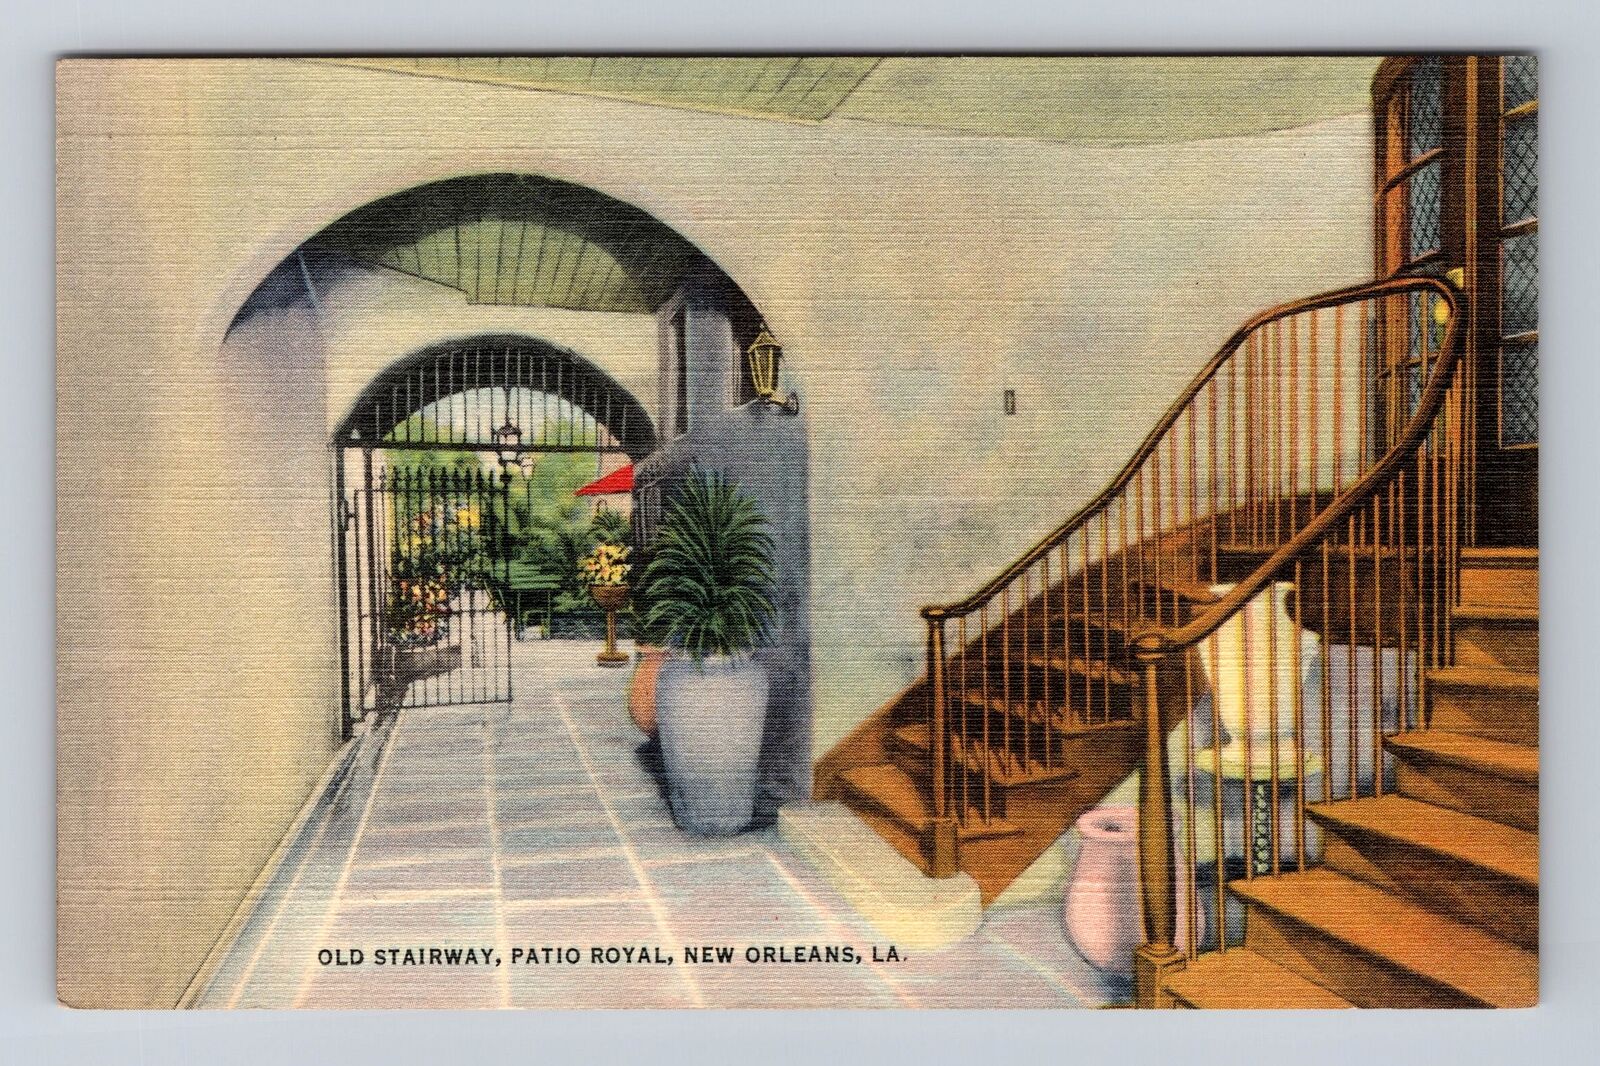 New Orleans LA-Louisiana, Patio Royal, Old Stairway, Antique Vintage Postcard